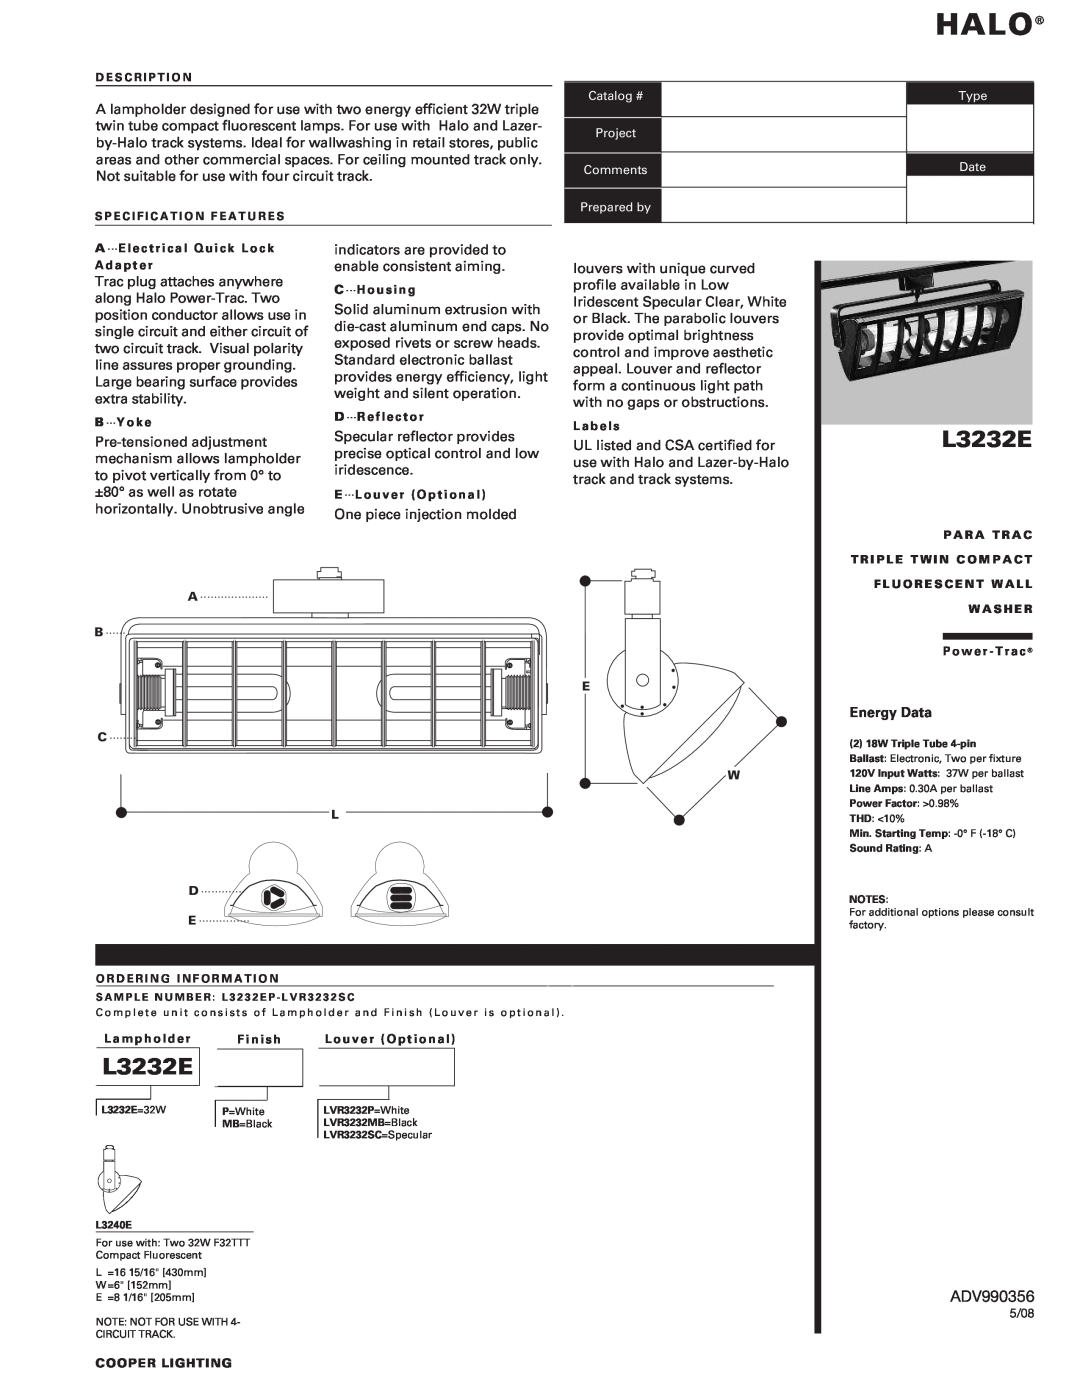 Cooper Lighting L3232E manual Halo, ADV990356, Energy Data 